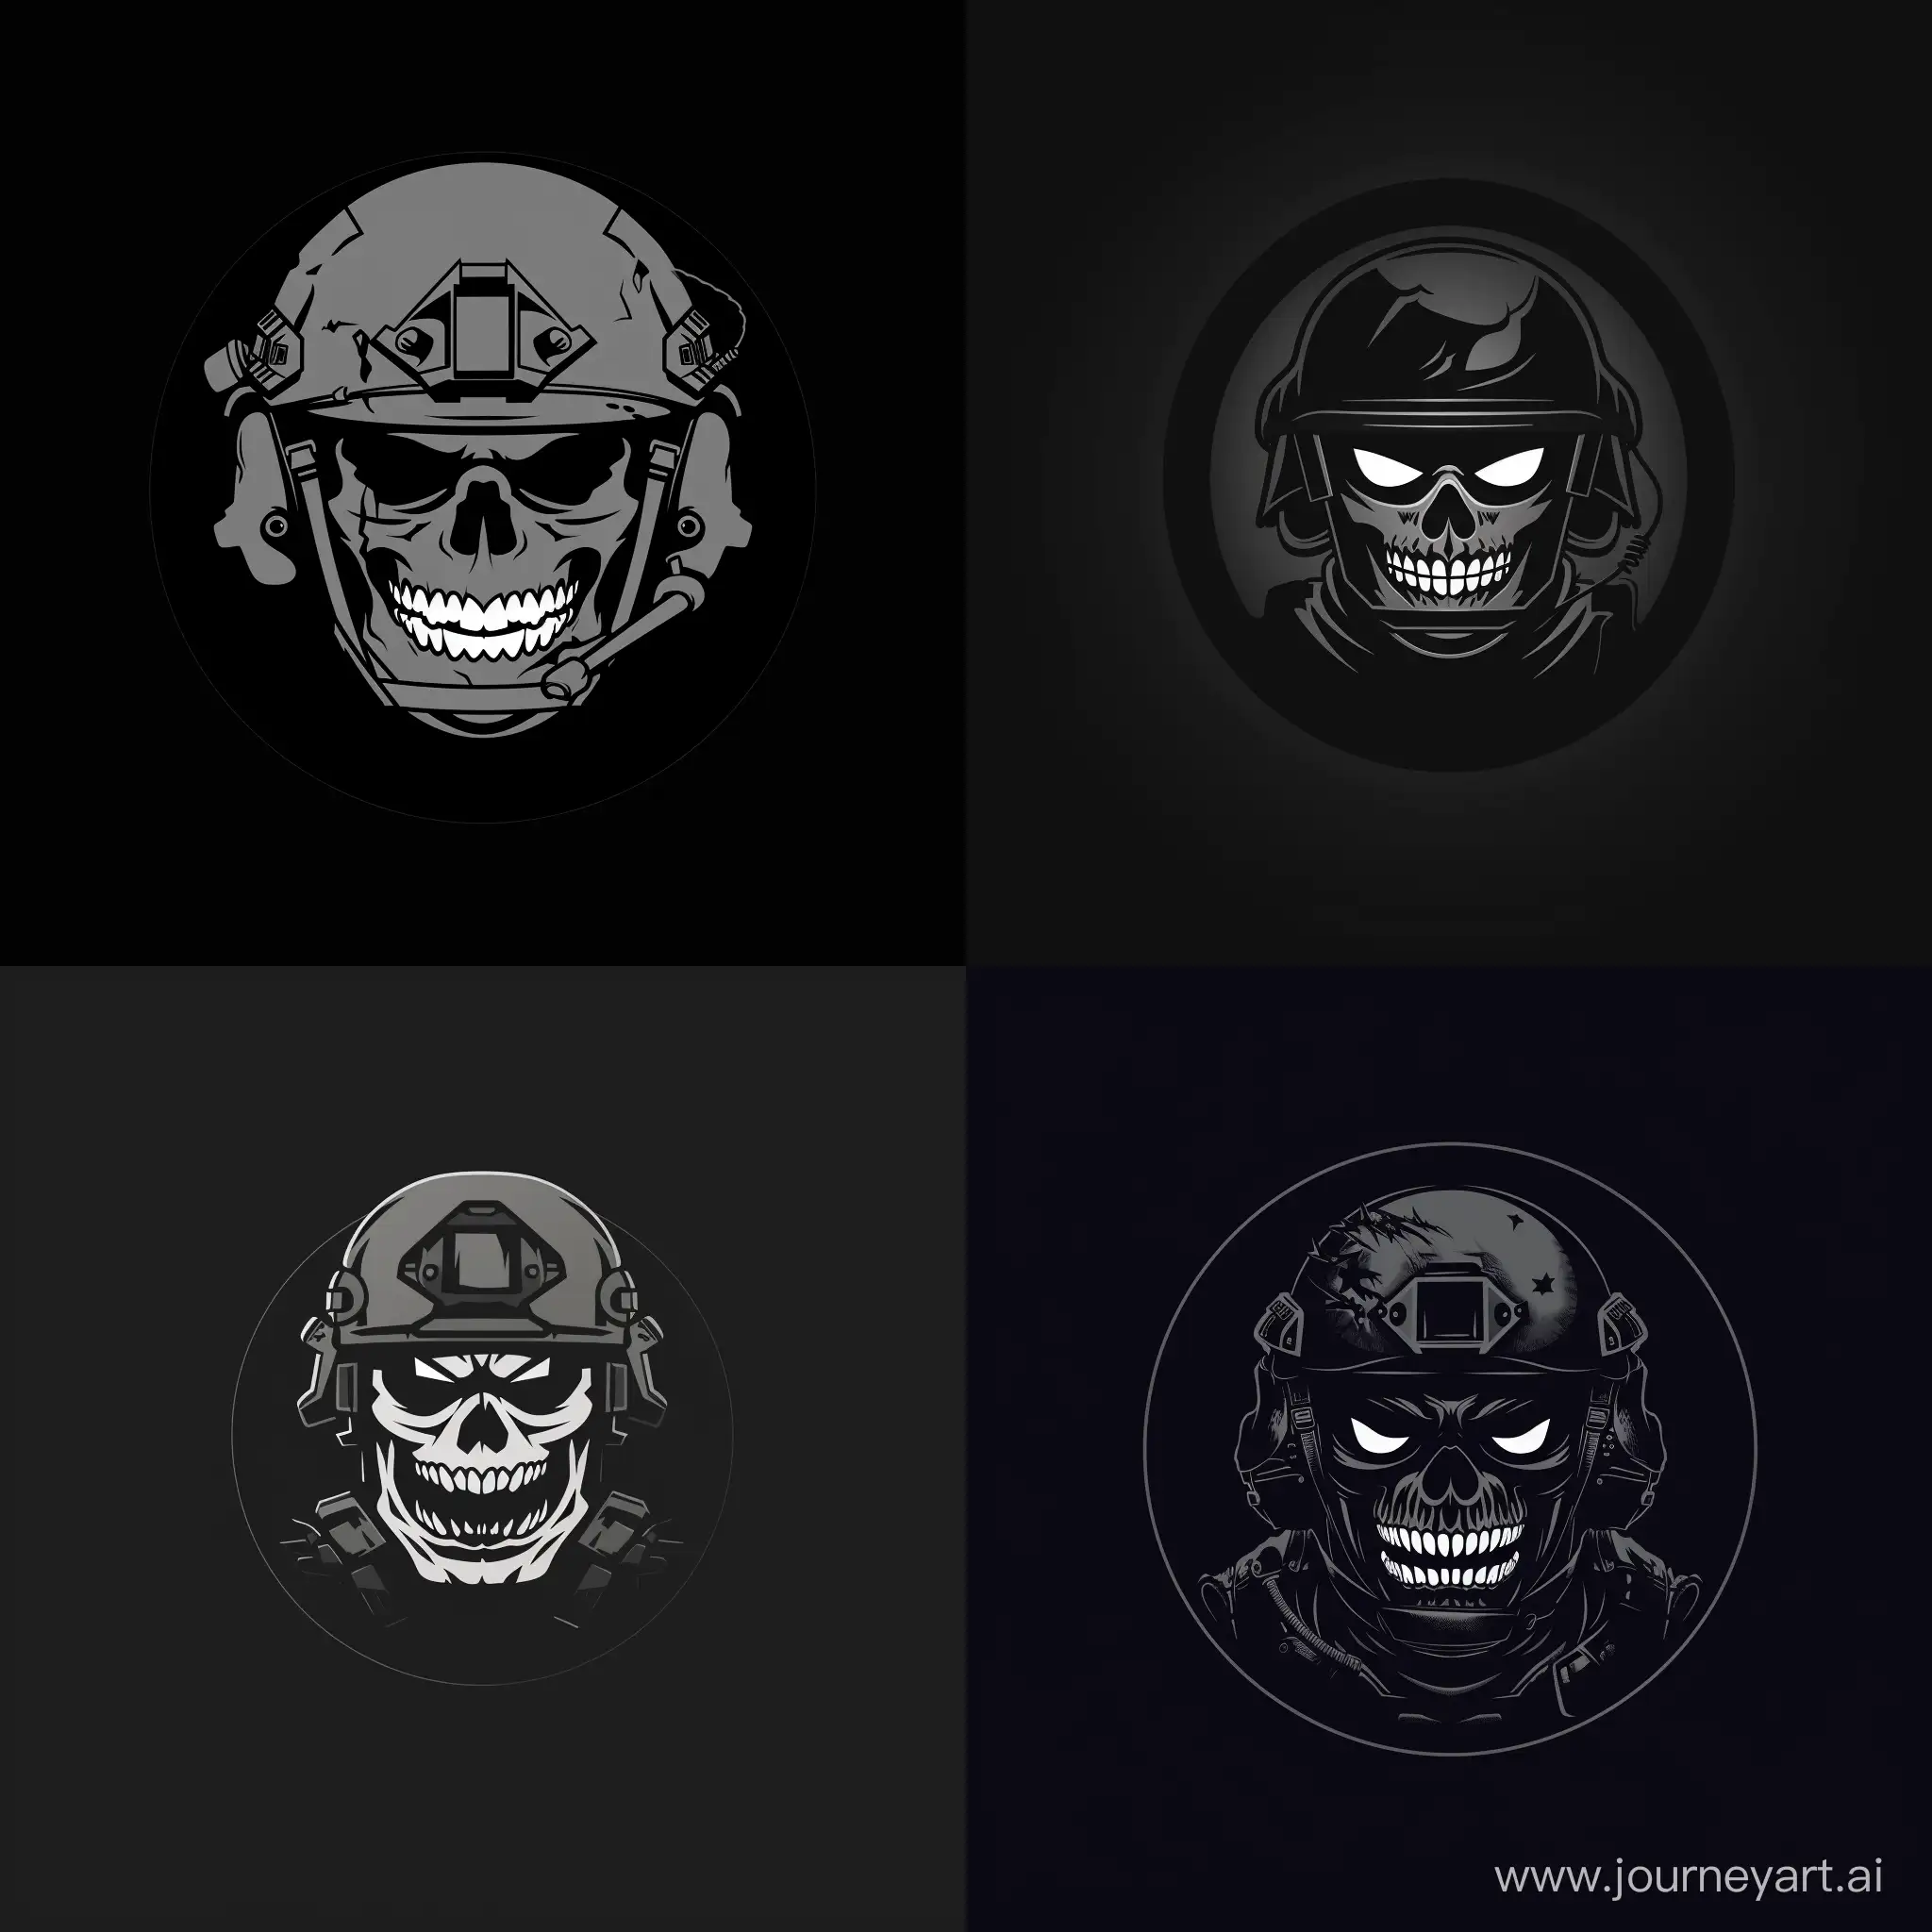 Modern-Military-Madness-Angry-Skull-Mask-in-Minimalistic-Black-Circle-Logo